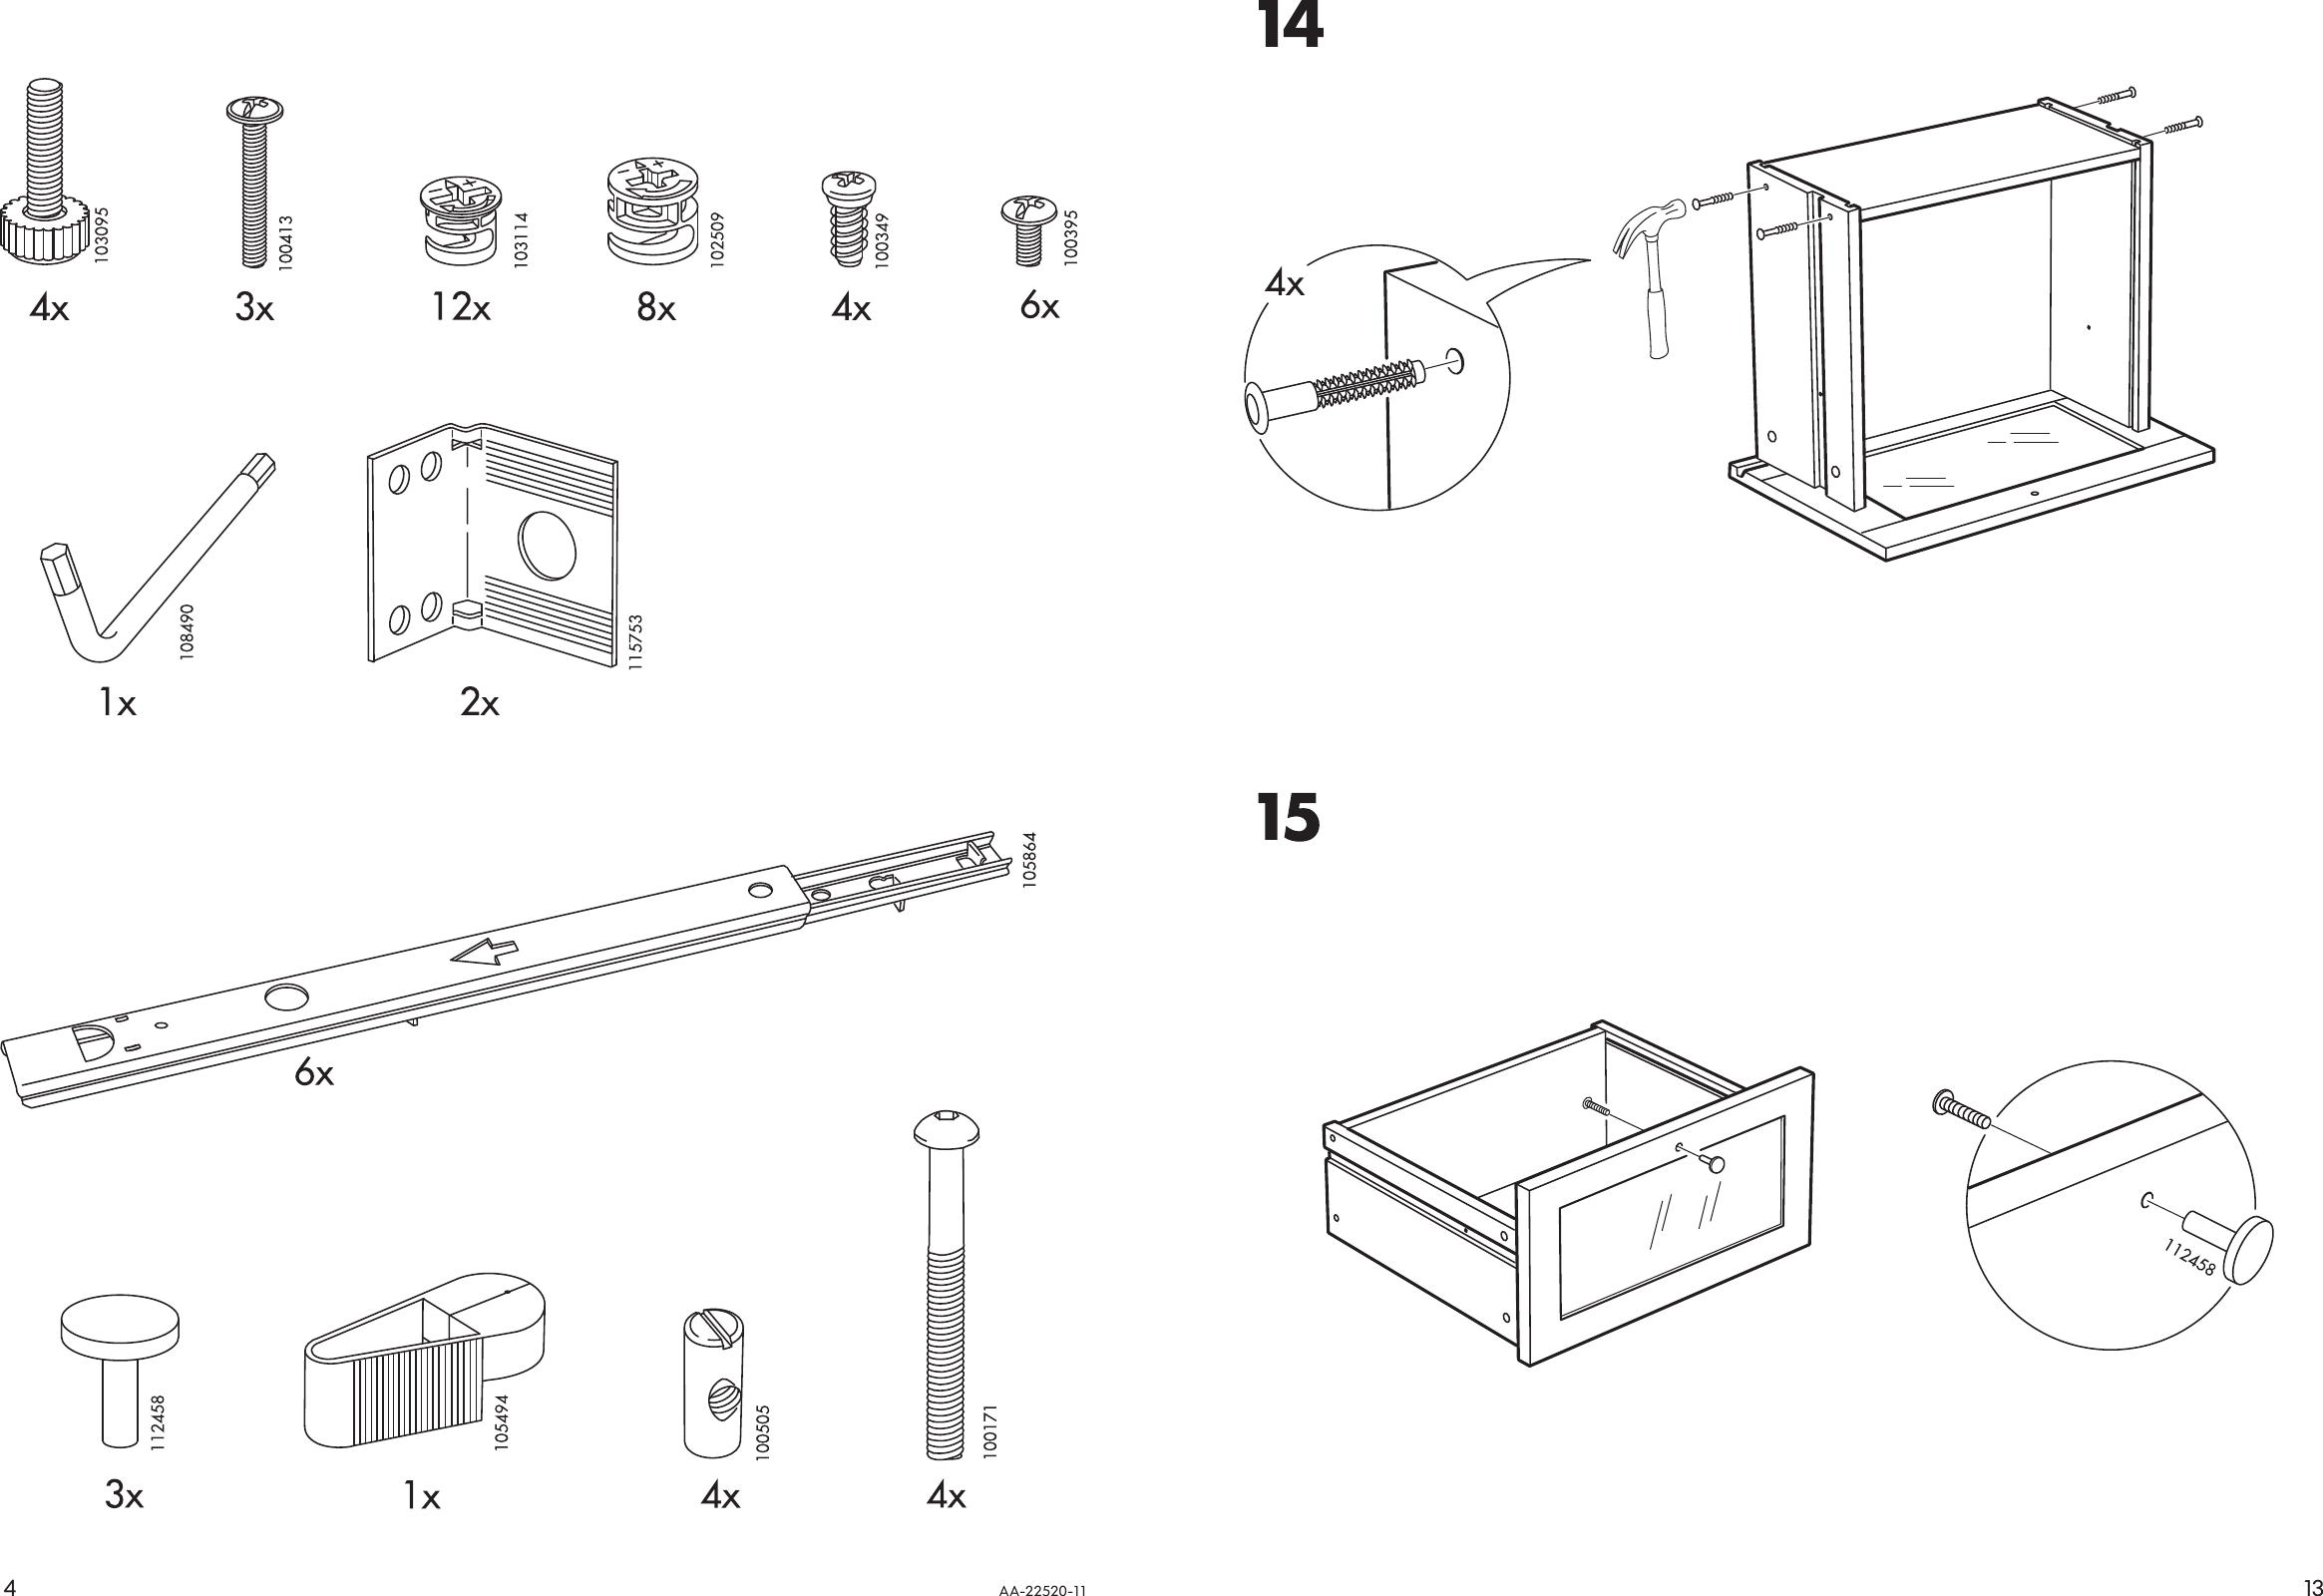 IkeaStenskarDrawUnitAssemblyInstruction.1313043034 User Guide Page 4 